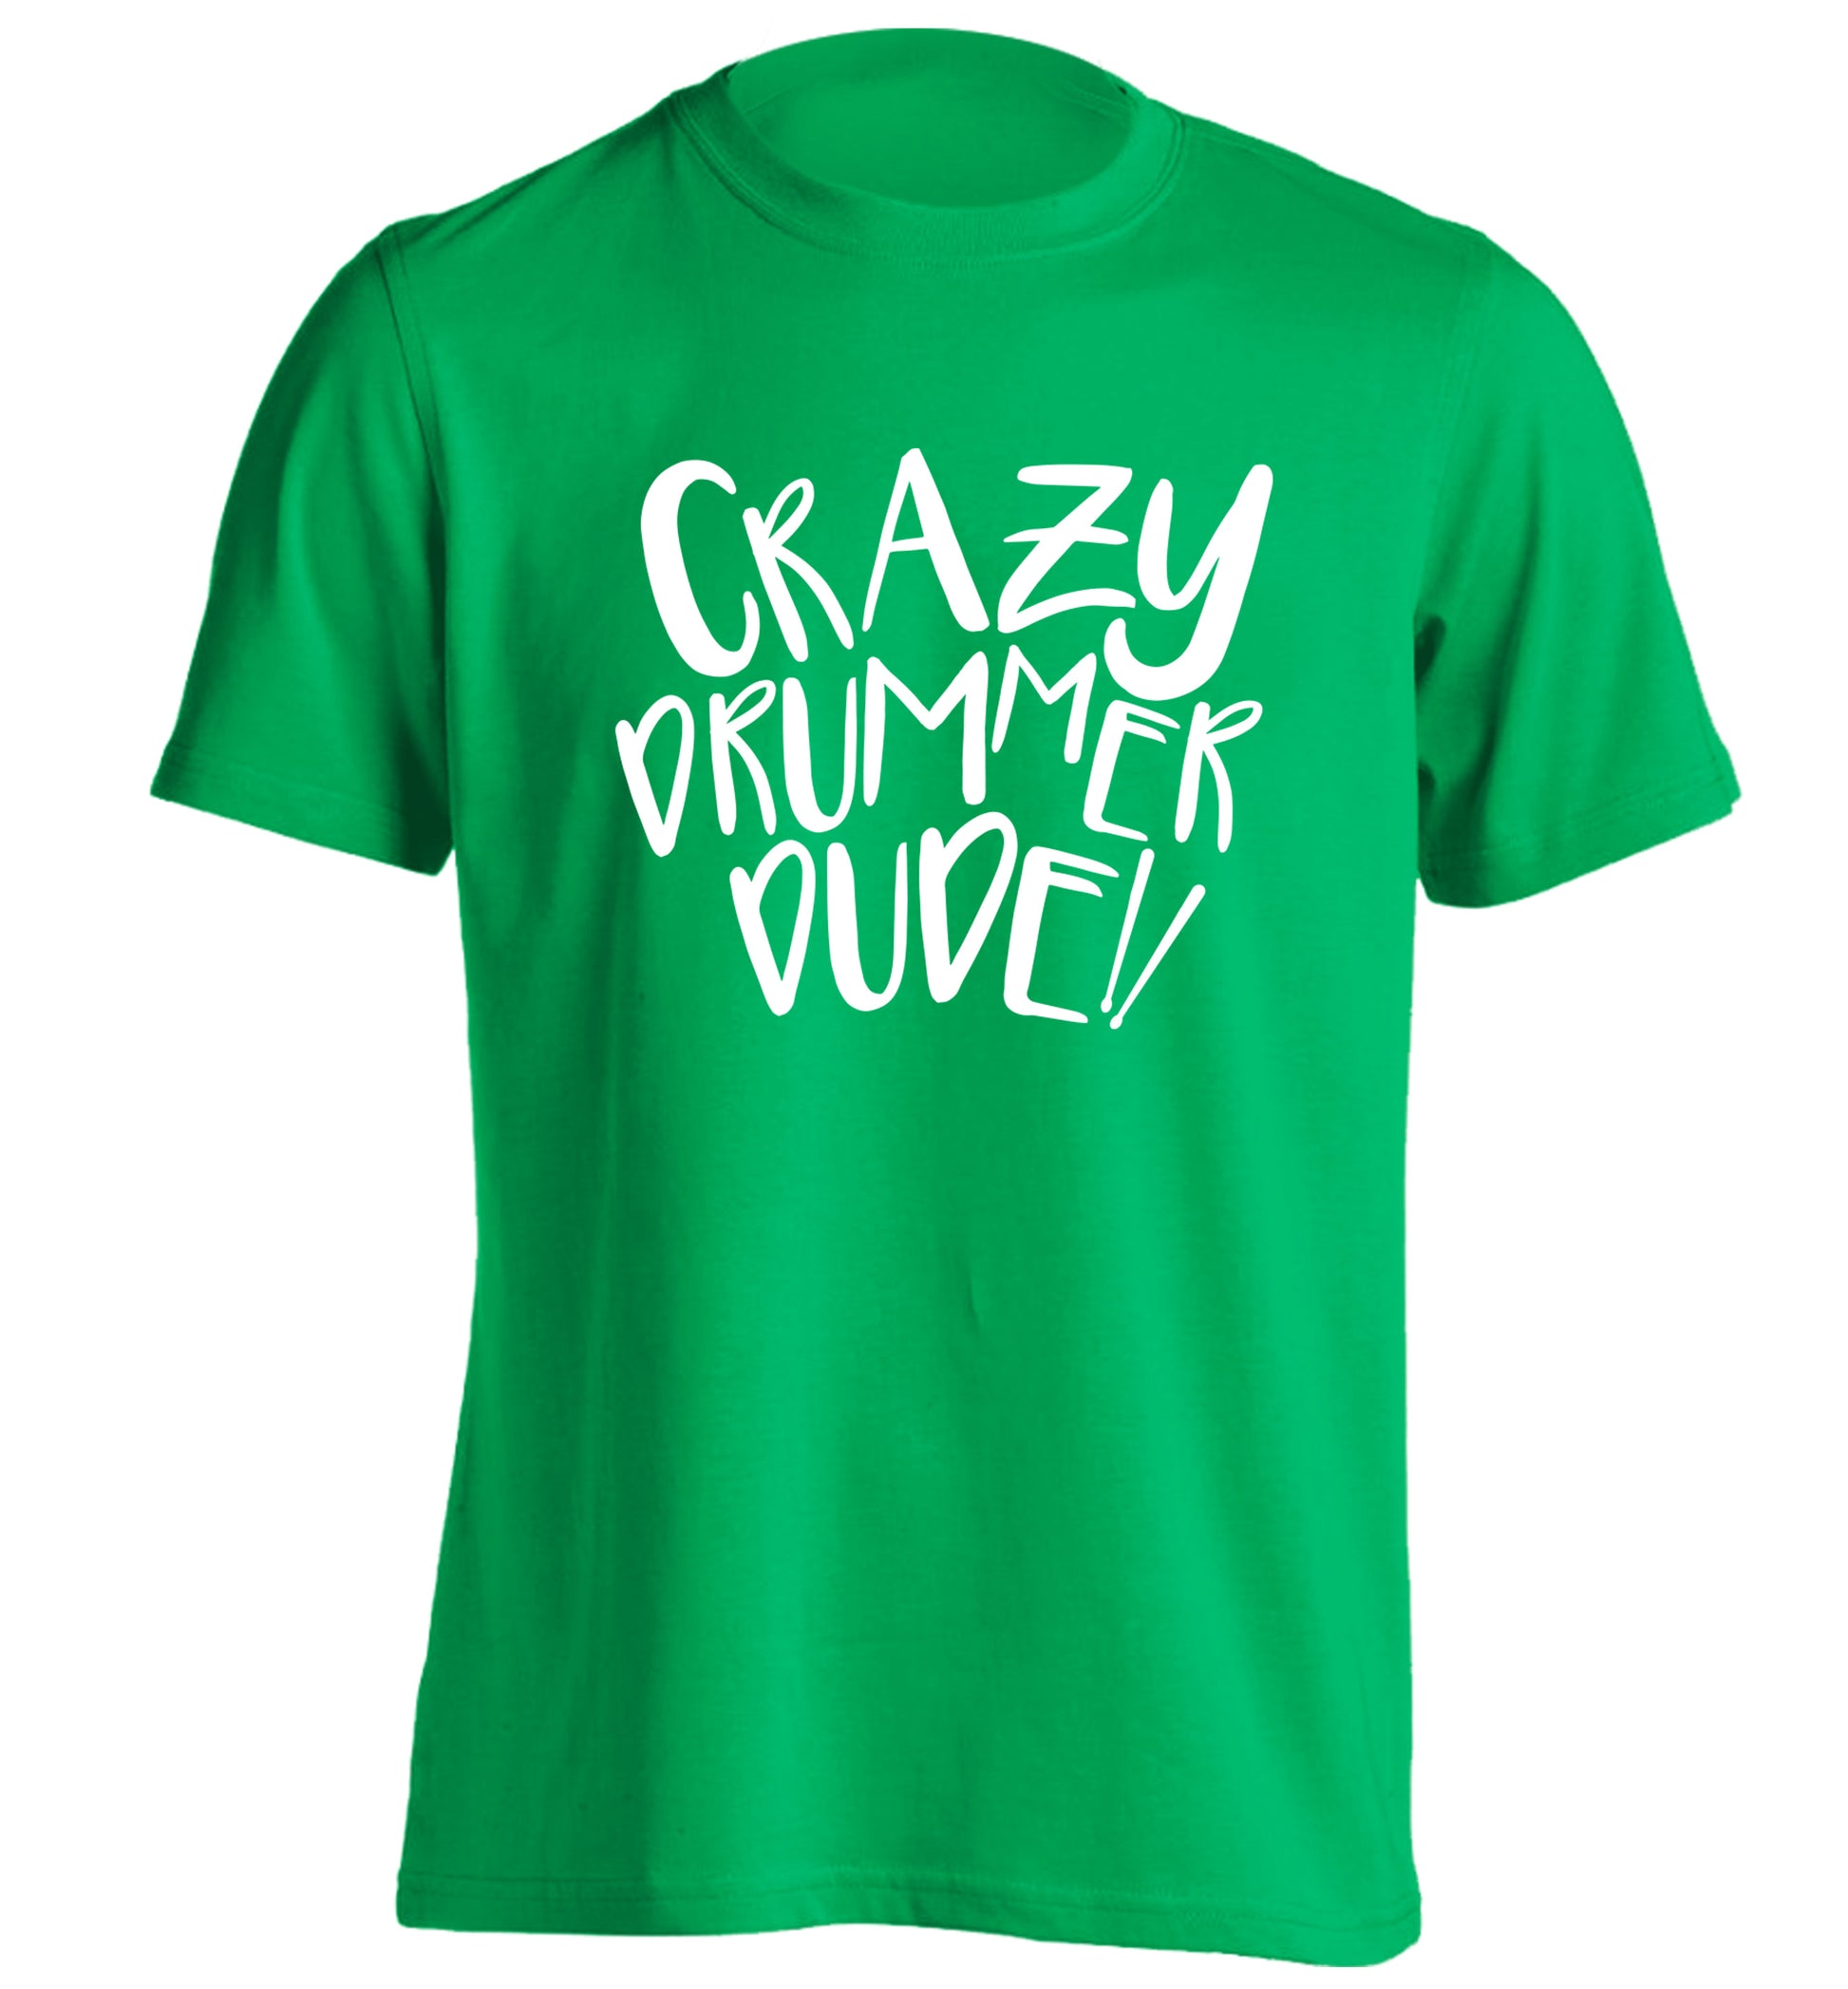 Crazy drummer dude adults unisex green Tshirt 2XL